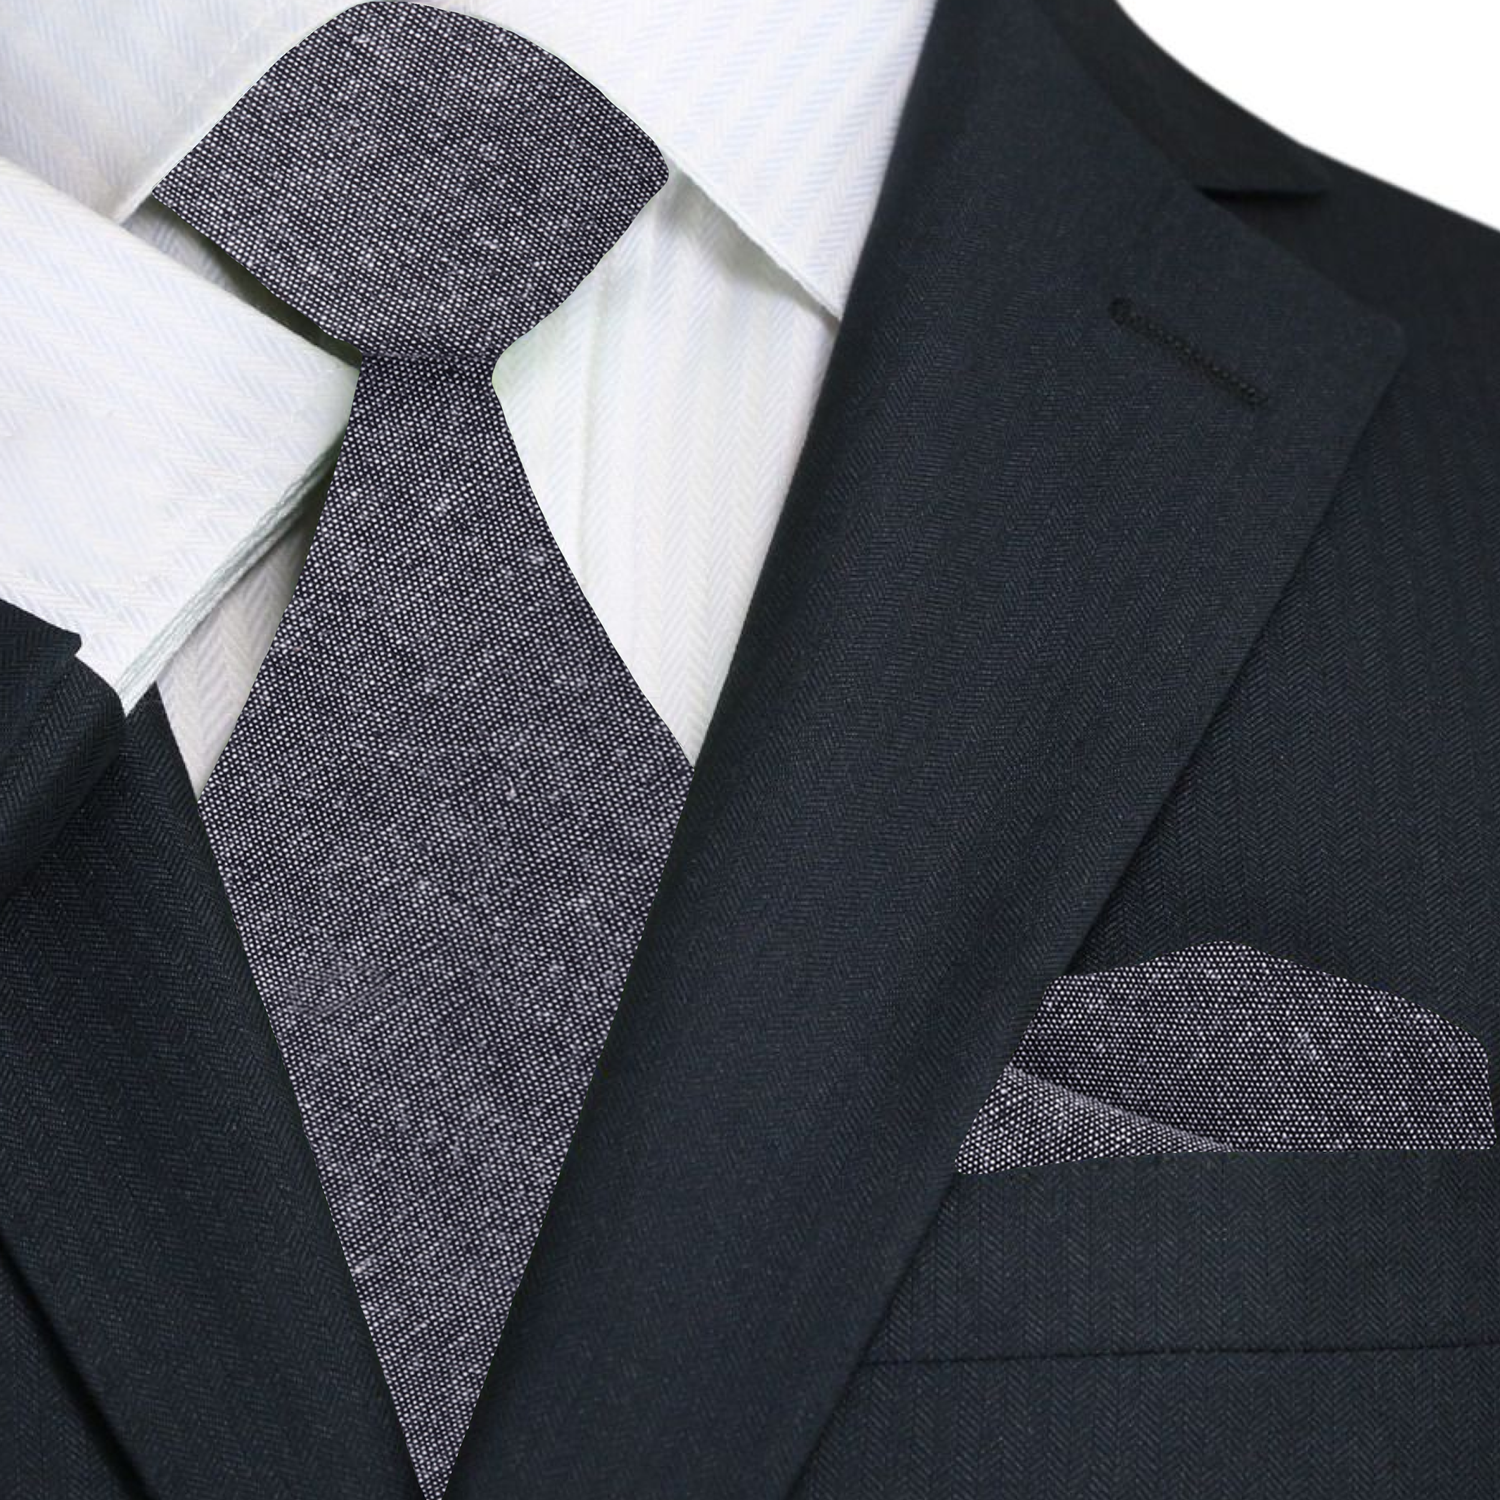 Premium Black and White Linen Tie and Pocket Square